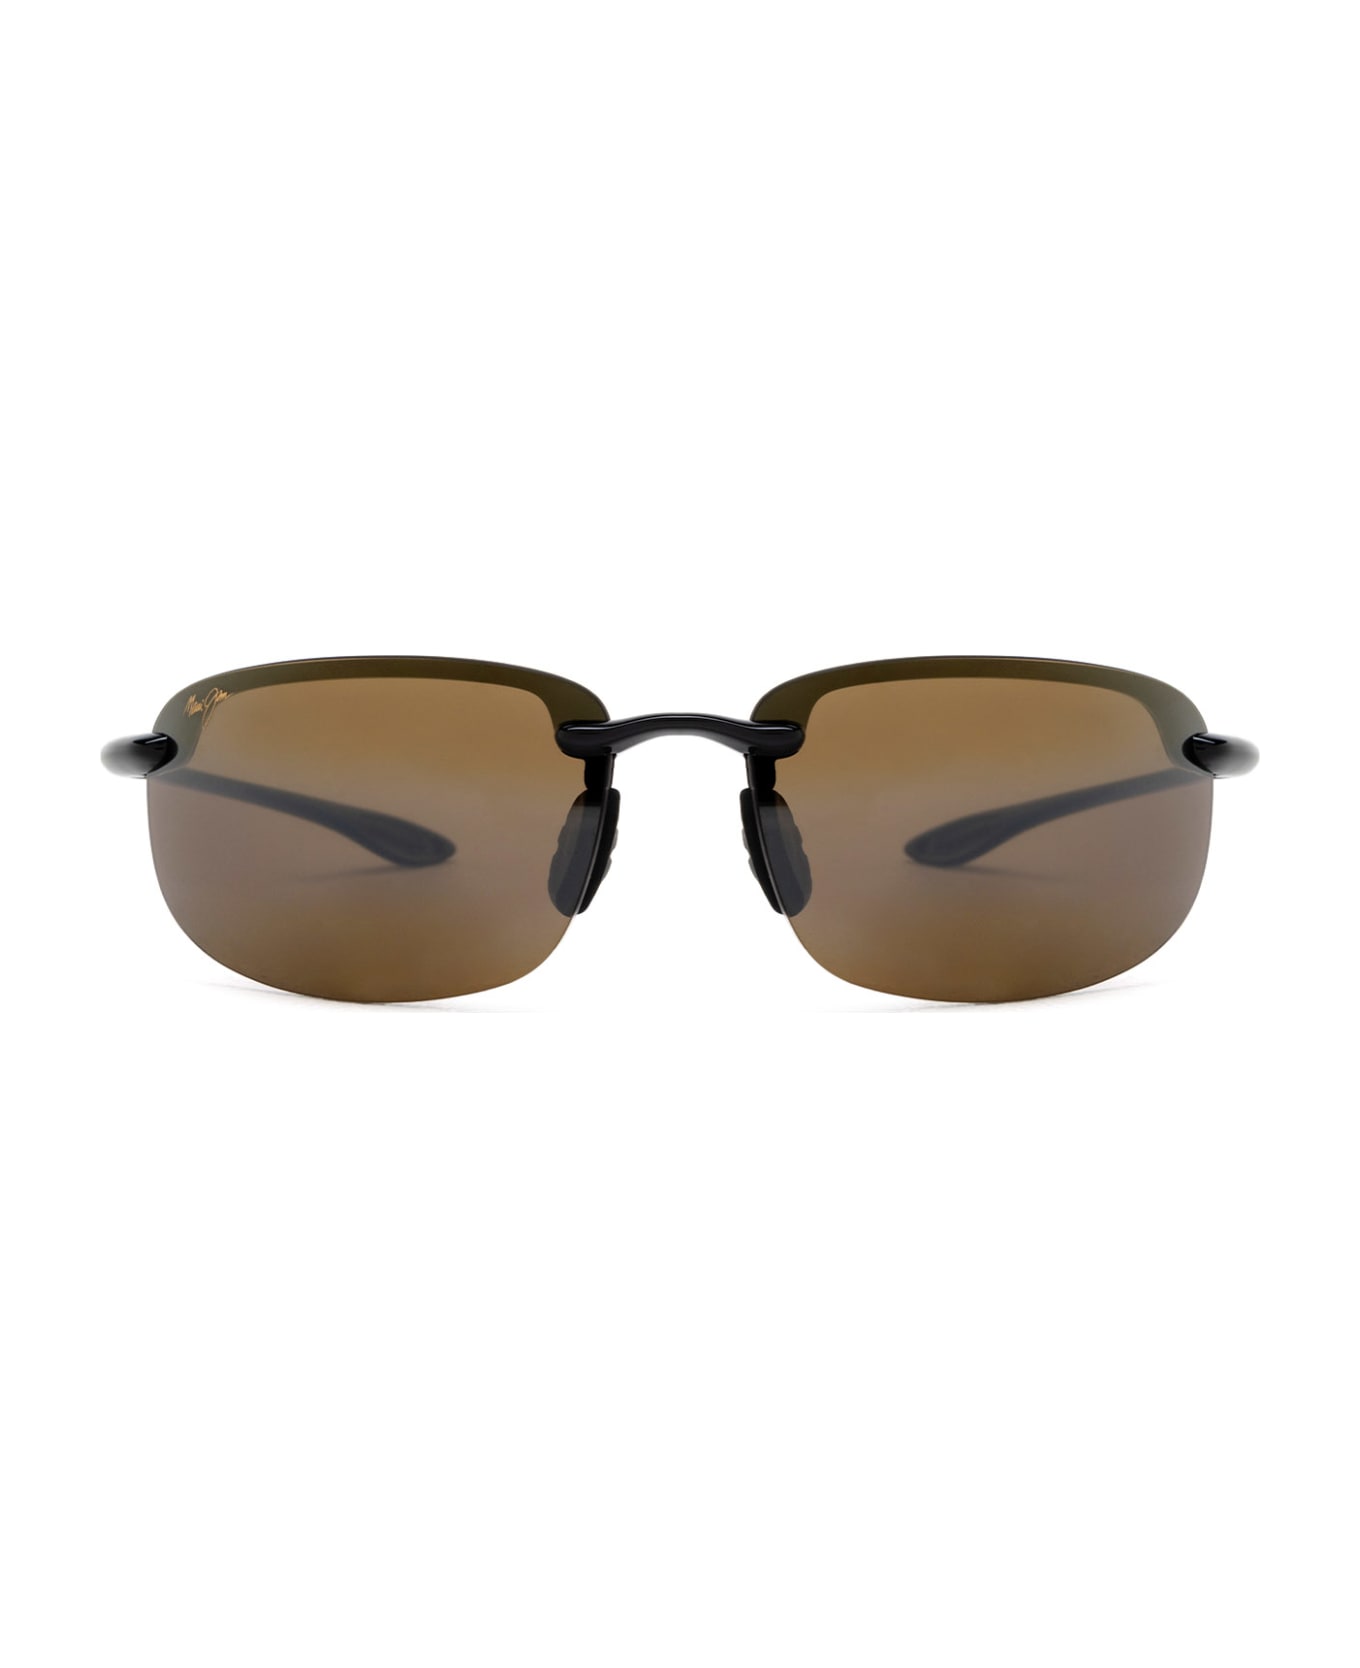 Maui Jim Mj407 Gloss Black Sunglasses - Gloss Black サングラス